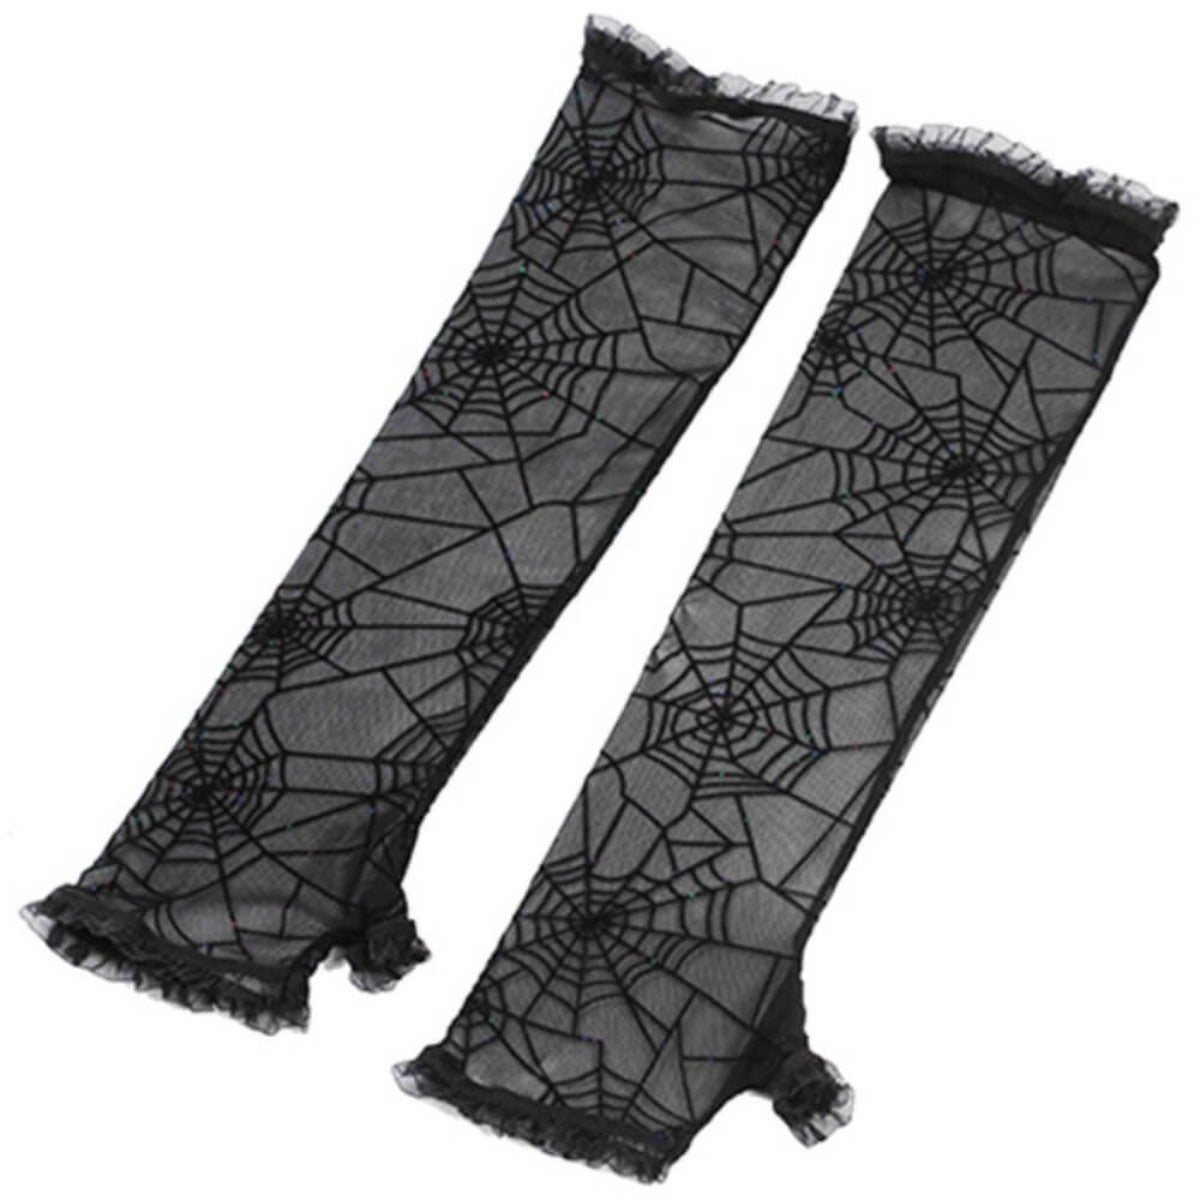 Ro Rox Cobweb Fingerless Gloves Cosplay Long Sleeve Gothic